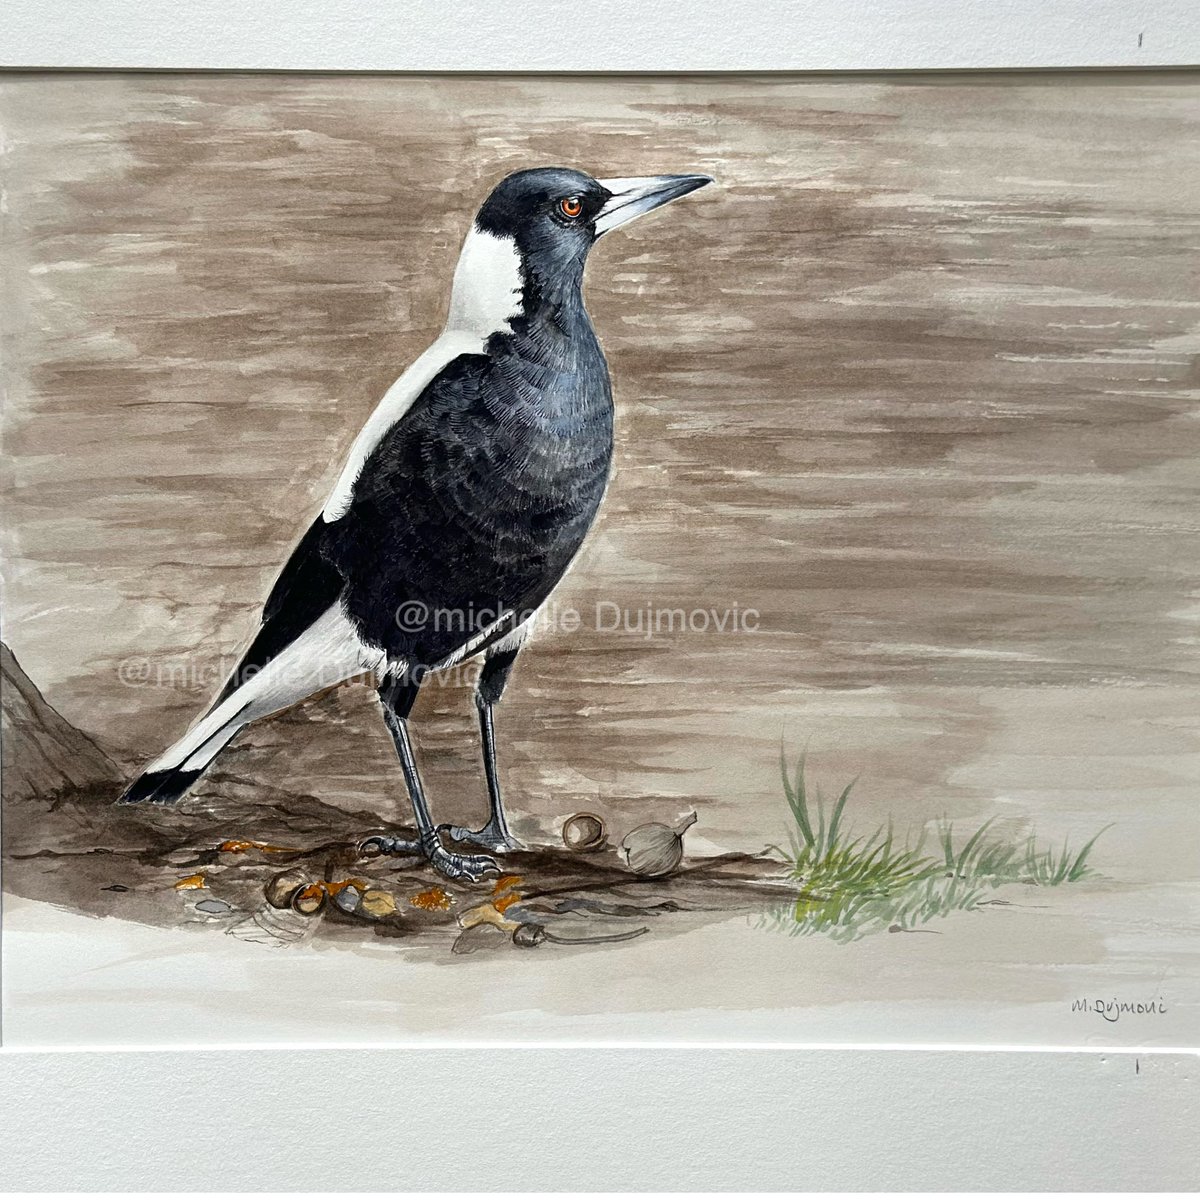 Finished my latest Australian Magpie painting! #birdart #natureart #naturalhistoryart #watercolour